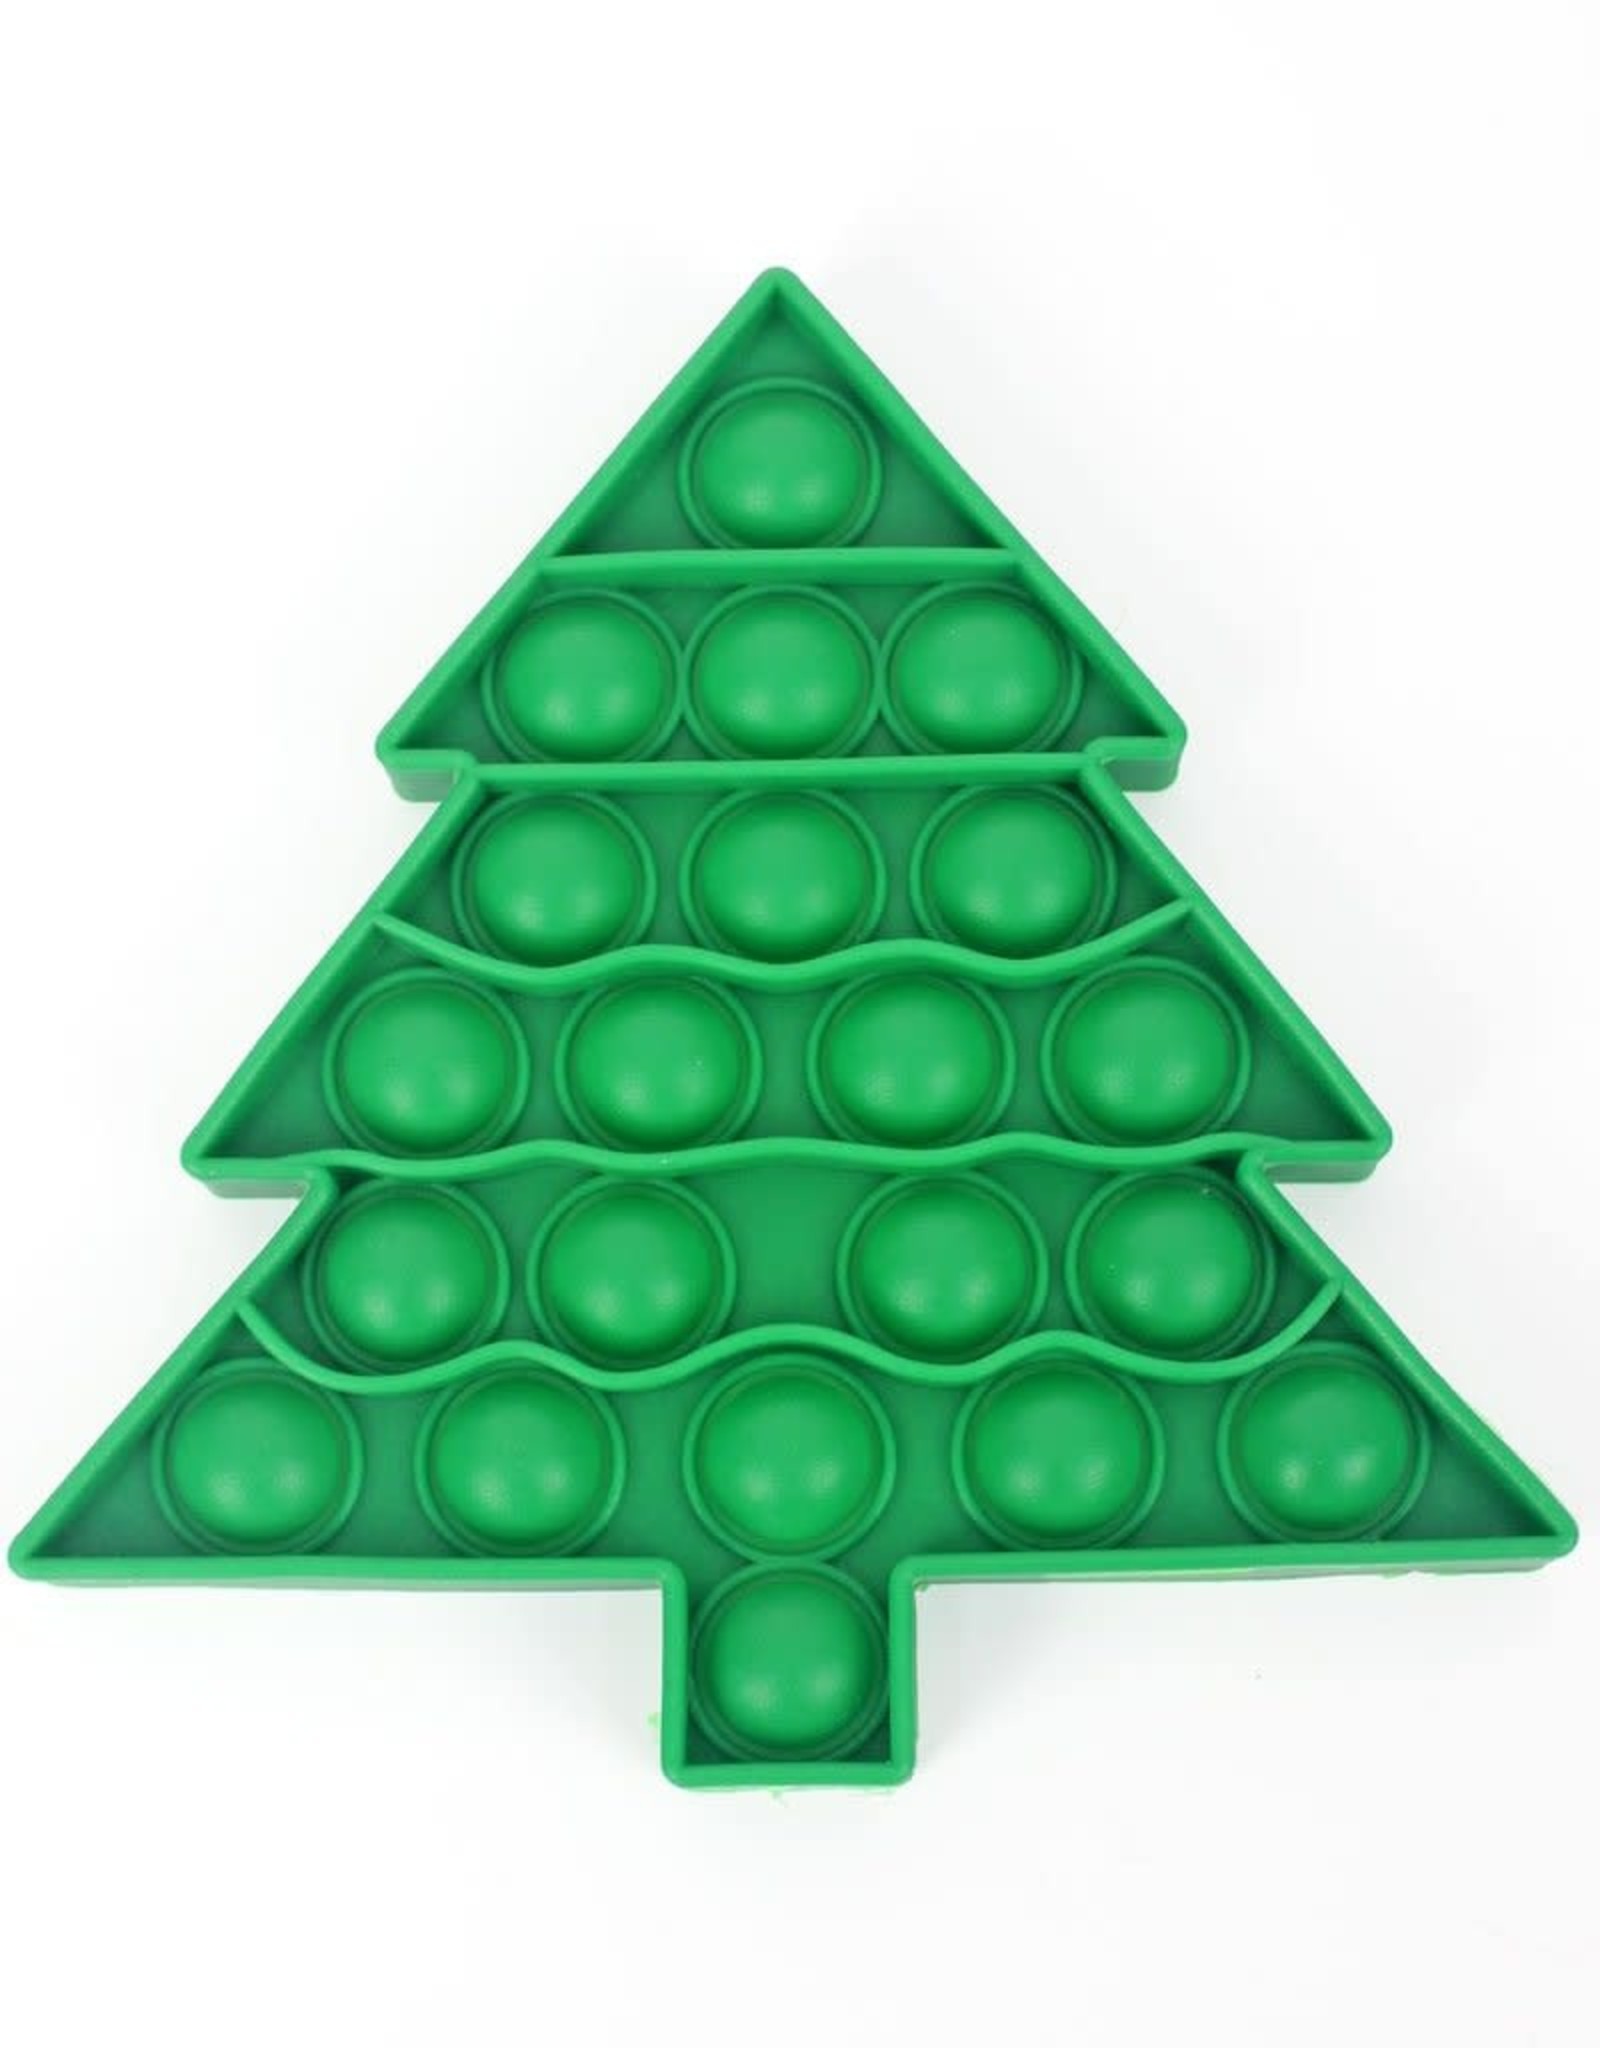 Christmas Tree Bubble Pop Fidget Toy